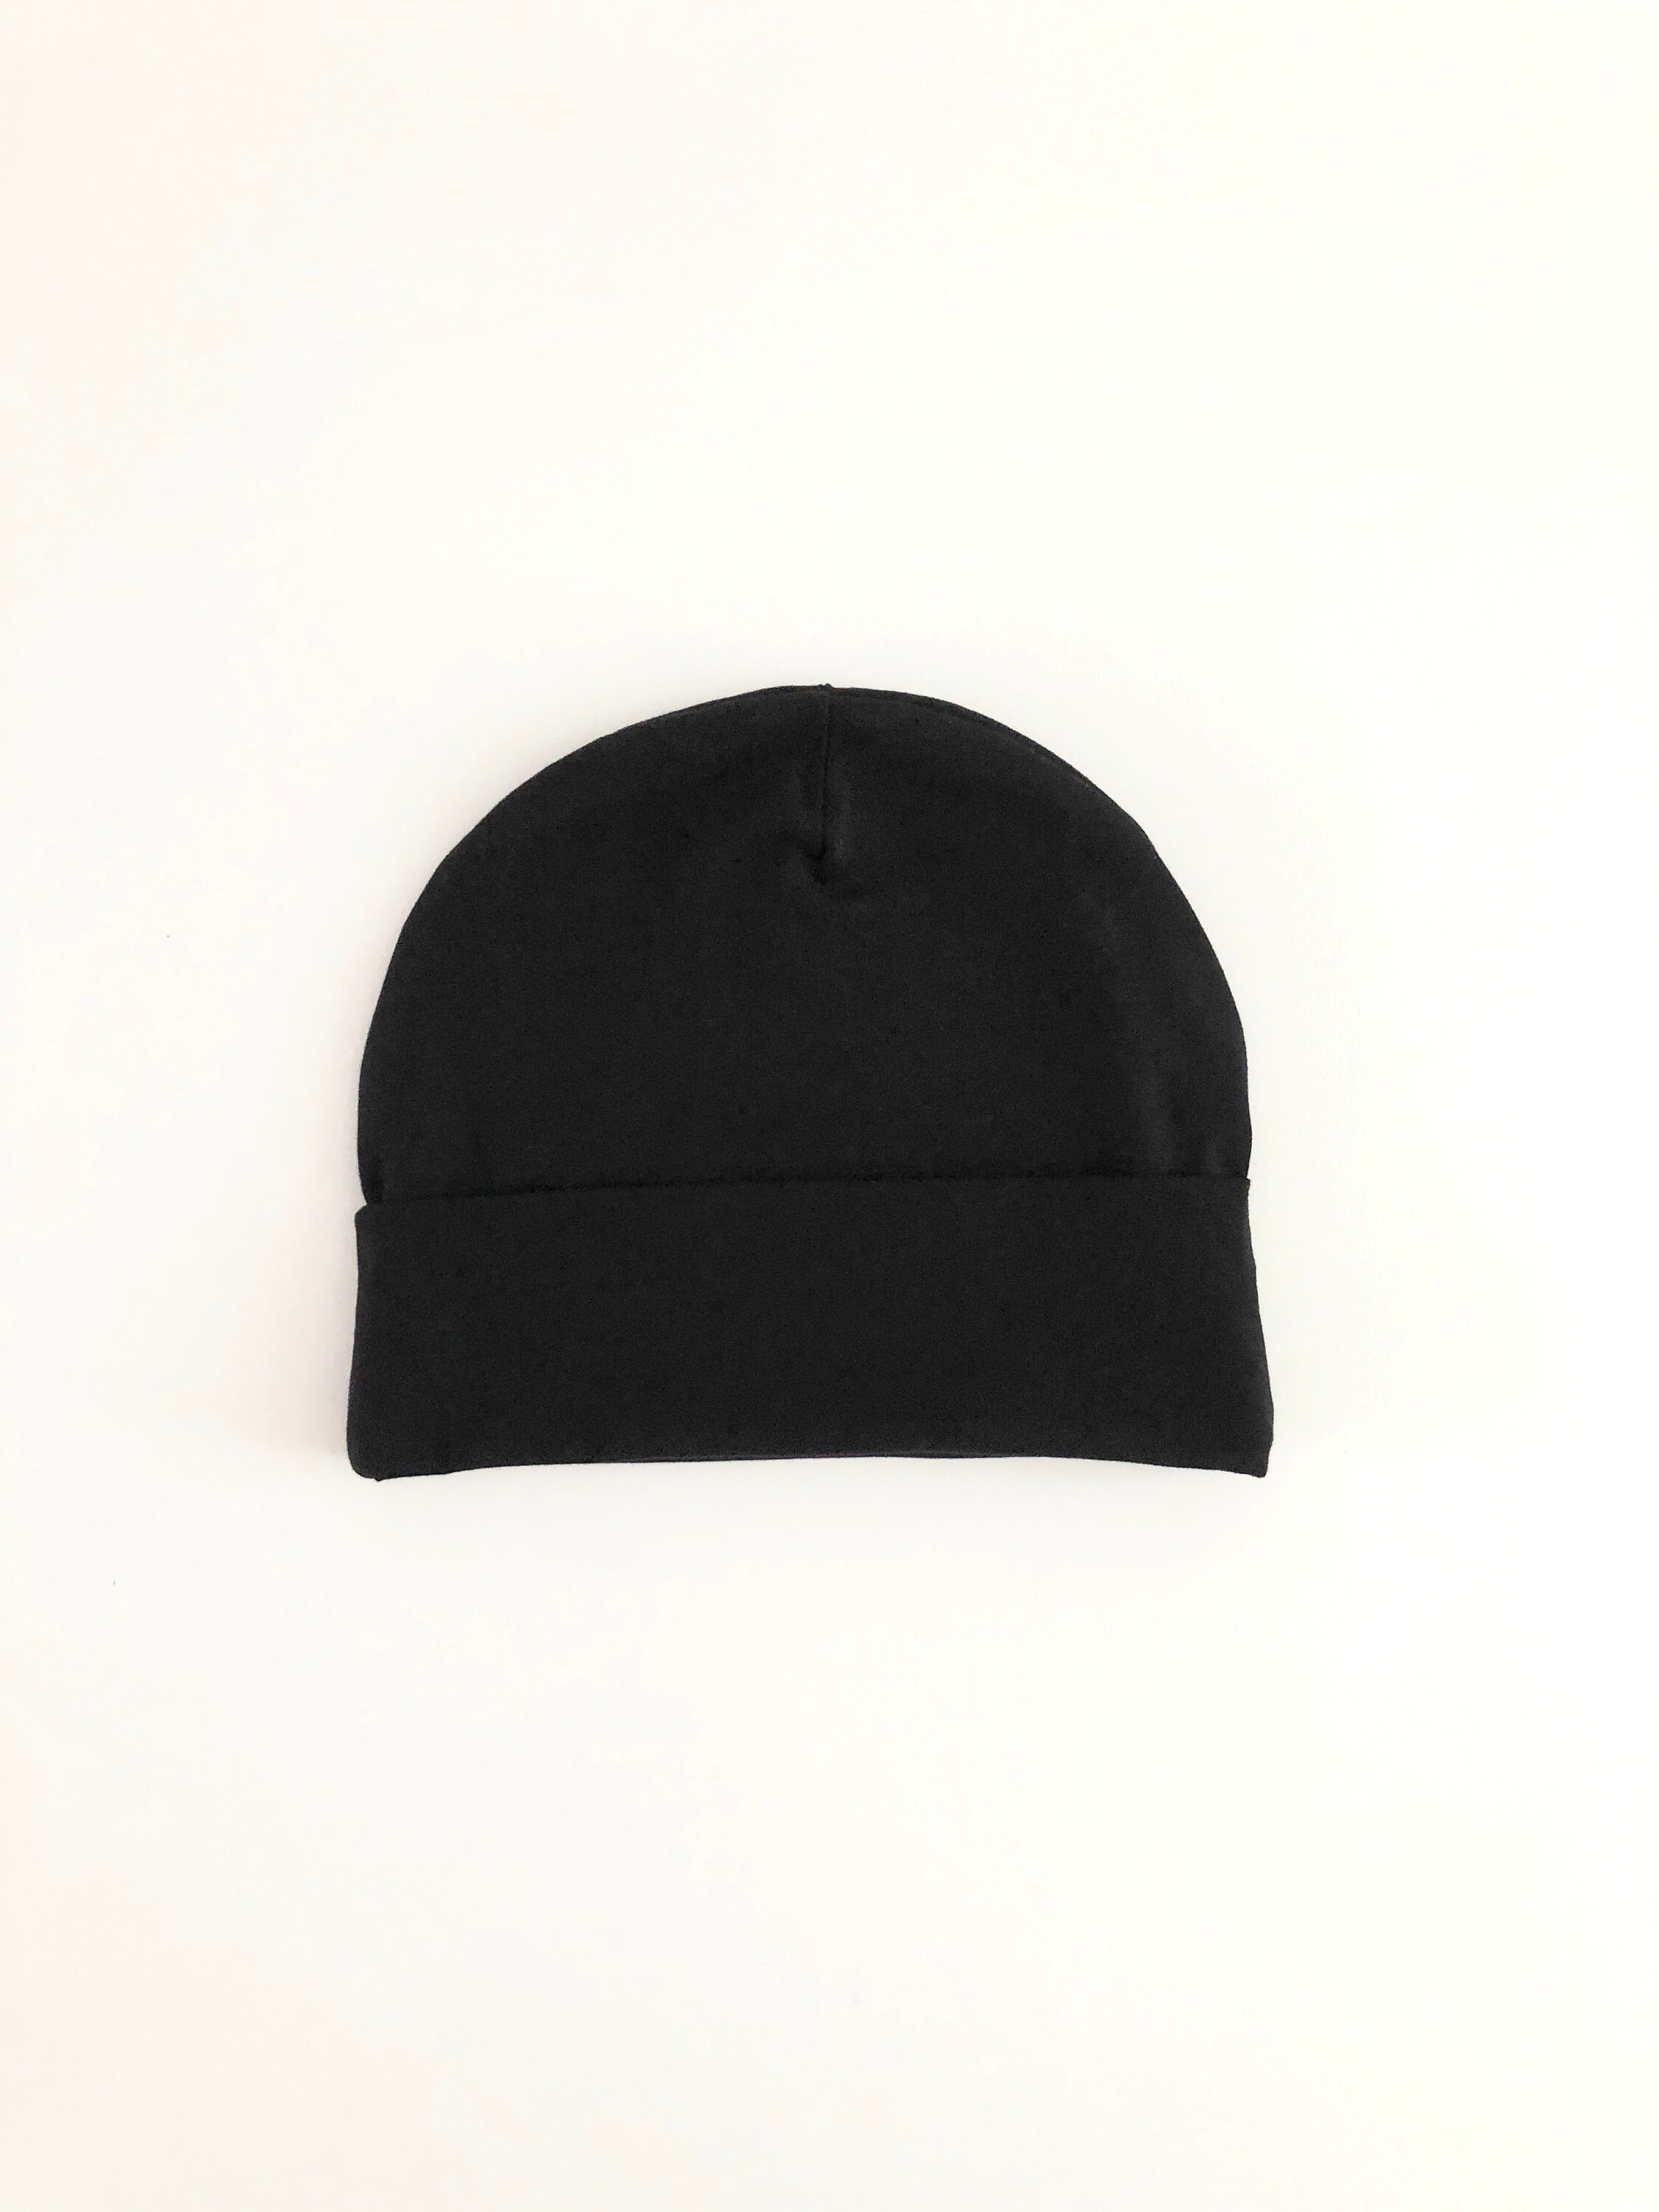 Black Beanie Hat Cuffed Beanie Black Slouch Hat Jersey | Etsy